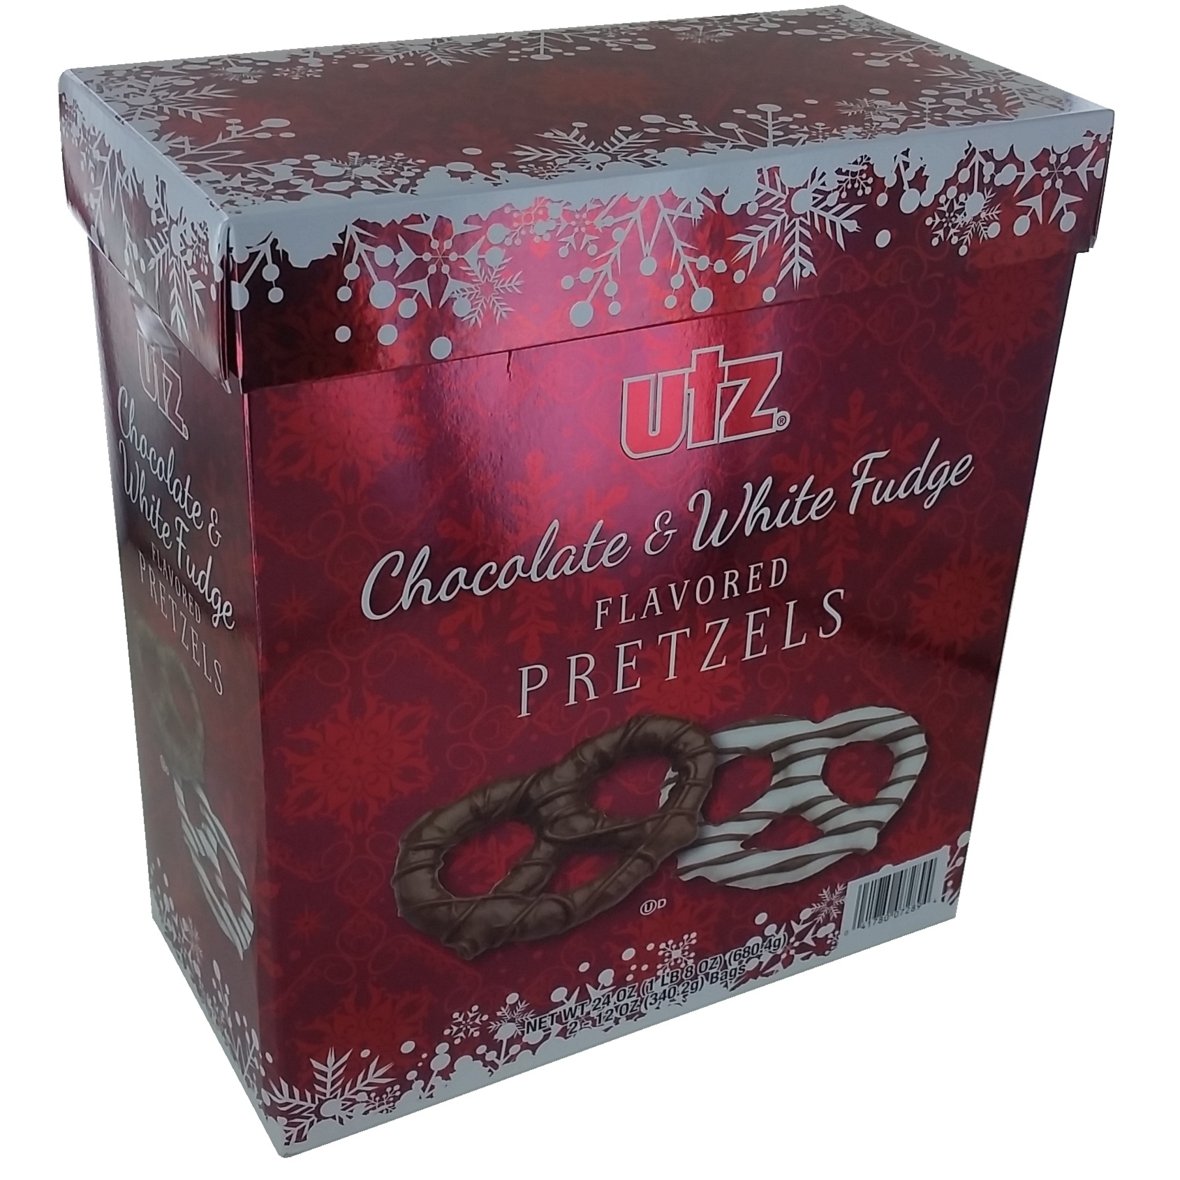 Utz Chocolate & White Fudge Flavored Pretzel Box (24 Ounce)